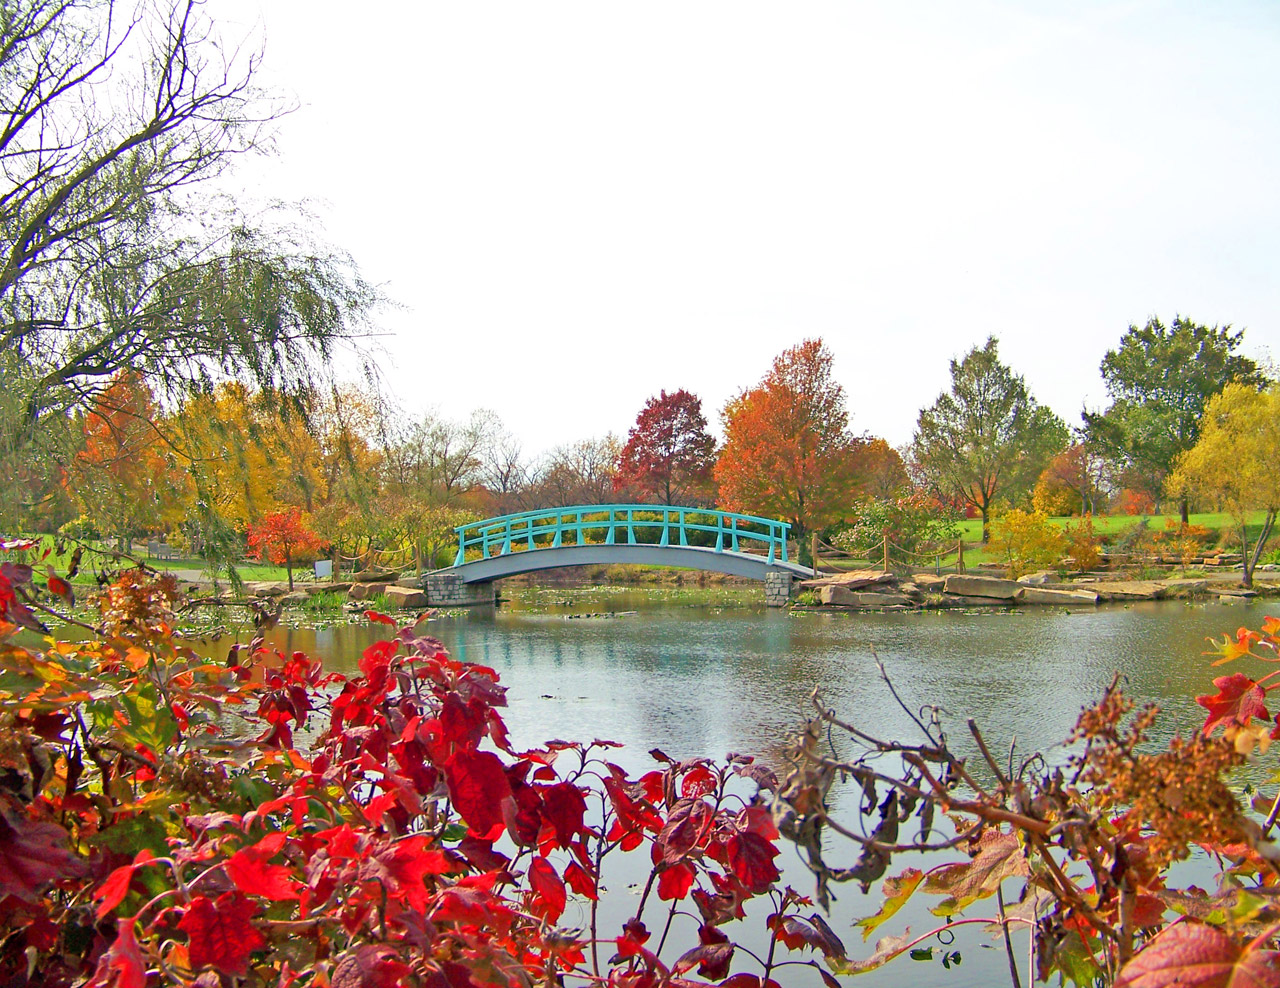 Monet Bridge in a city park in the fall